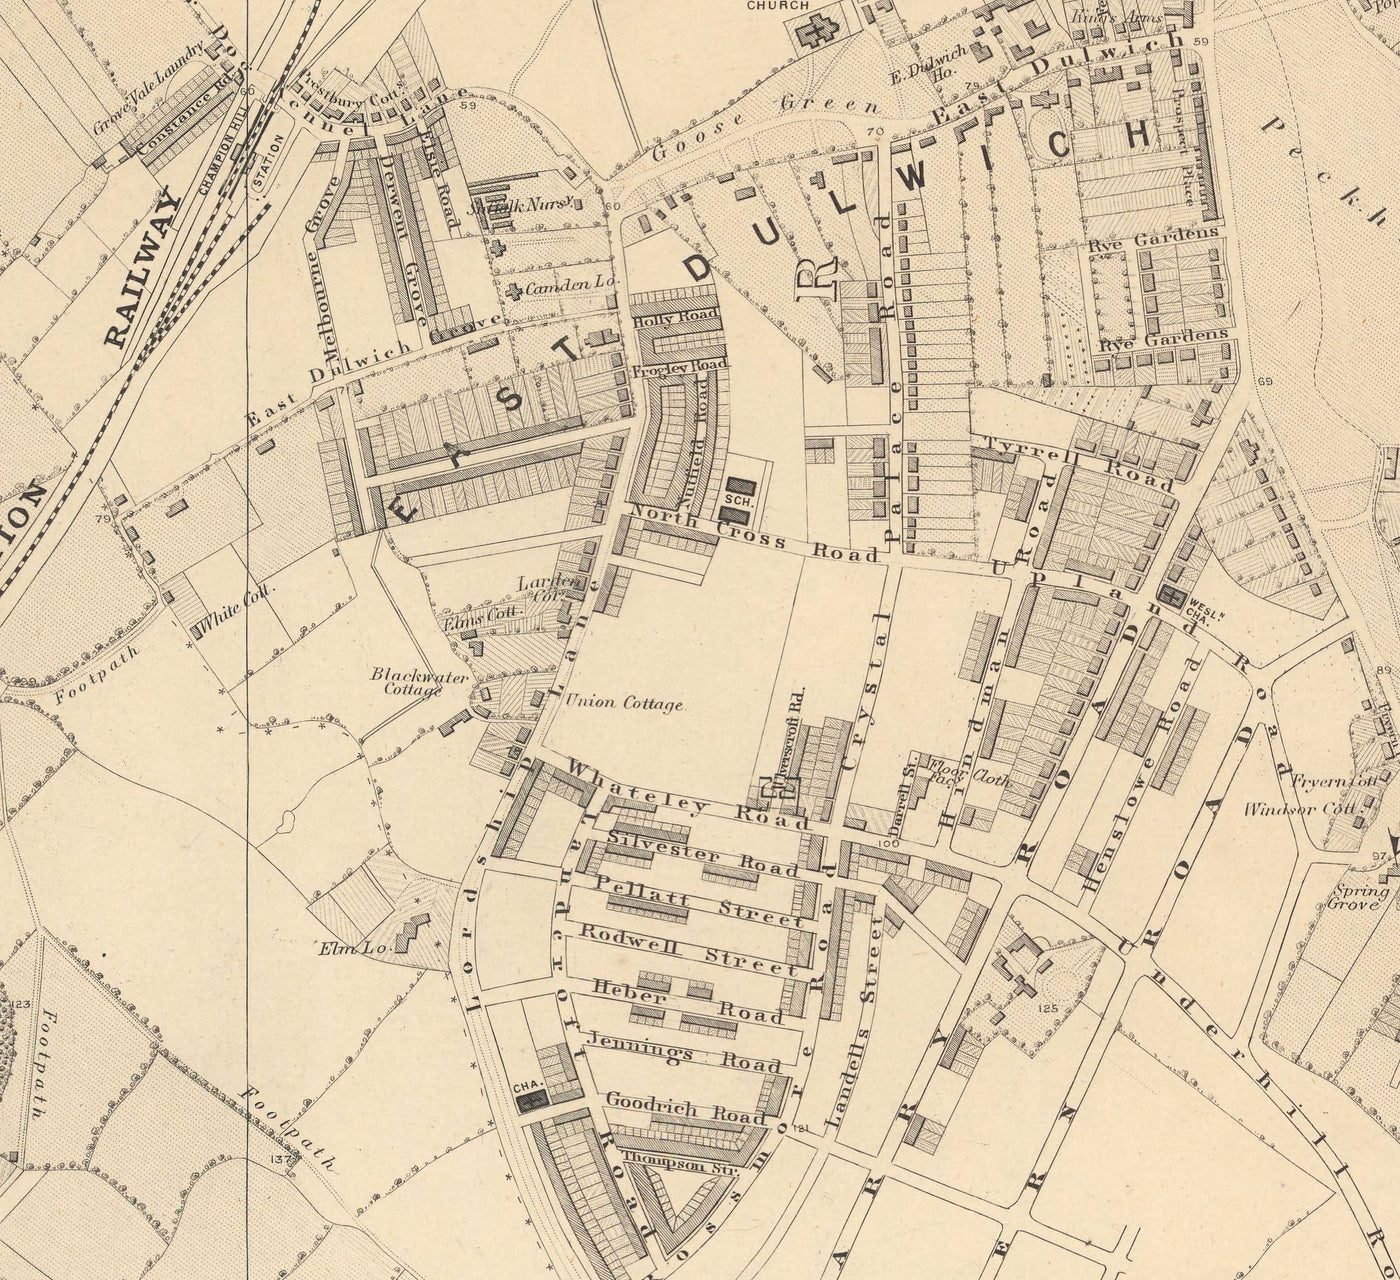 Old Map of South London in 1862 by Edward Stanford - Dulwich, Peckham Rye, Herne Hill, Forest Hill - SE24, SE22, SE21, SE23